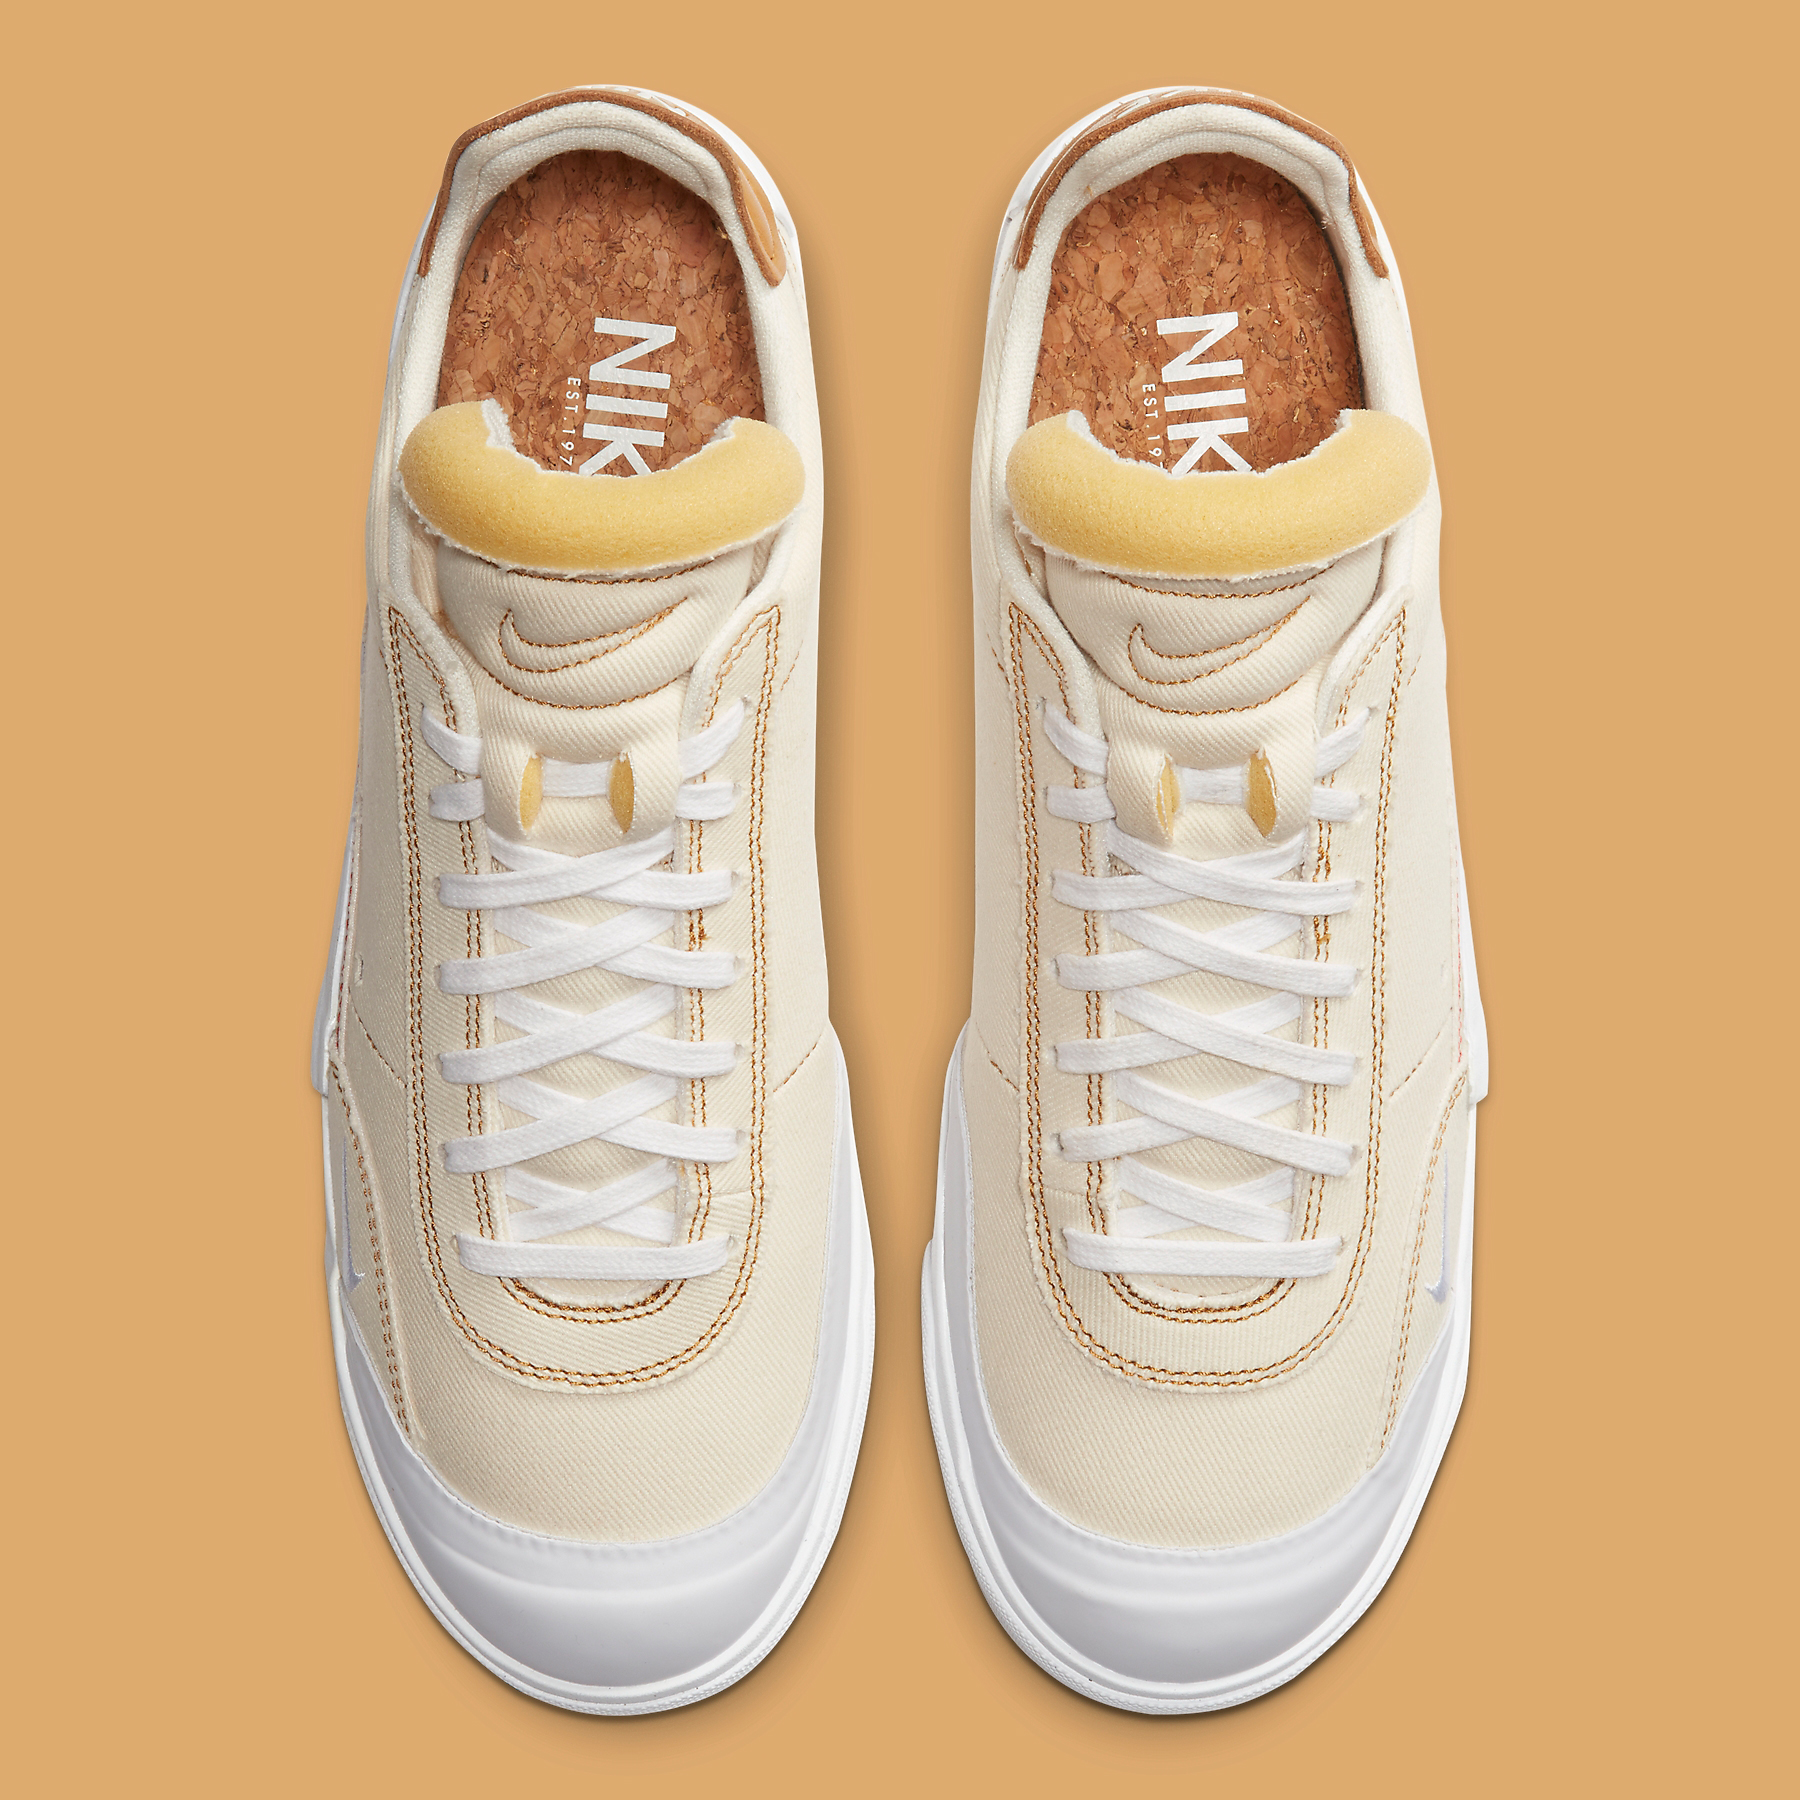 Nike Drop Type White CW6213-212 Release Info | SneakerNews.com